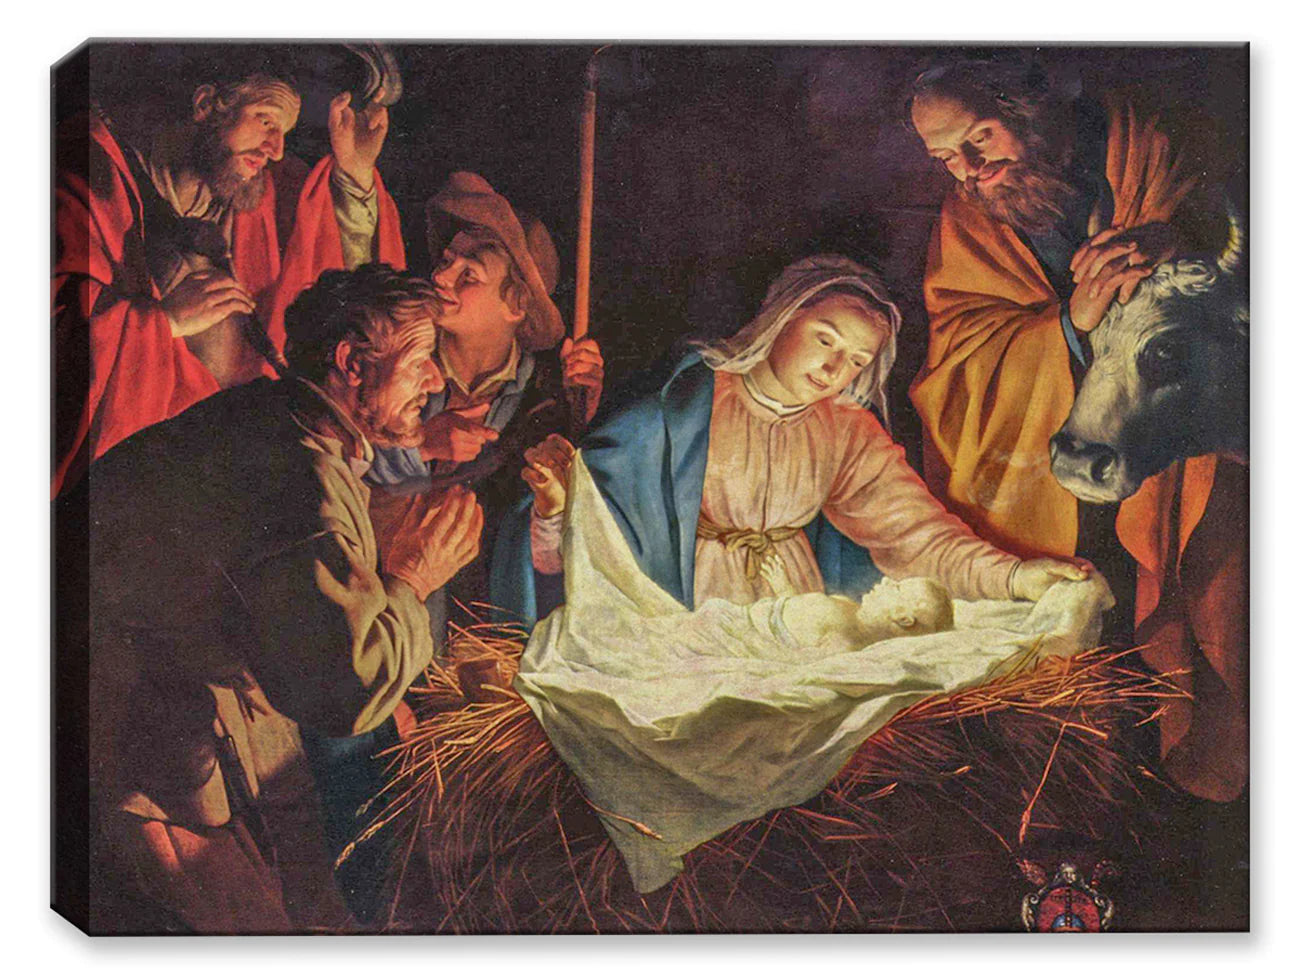 Painting of newborn baby Jesus